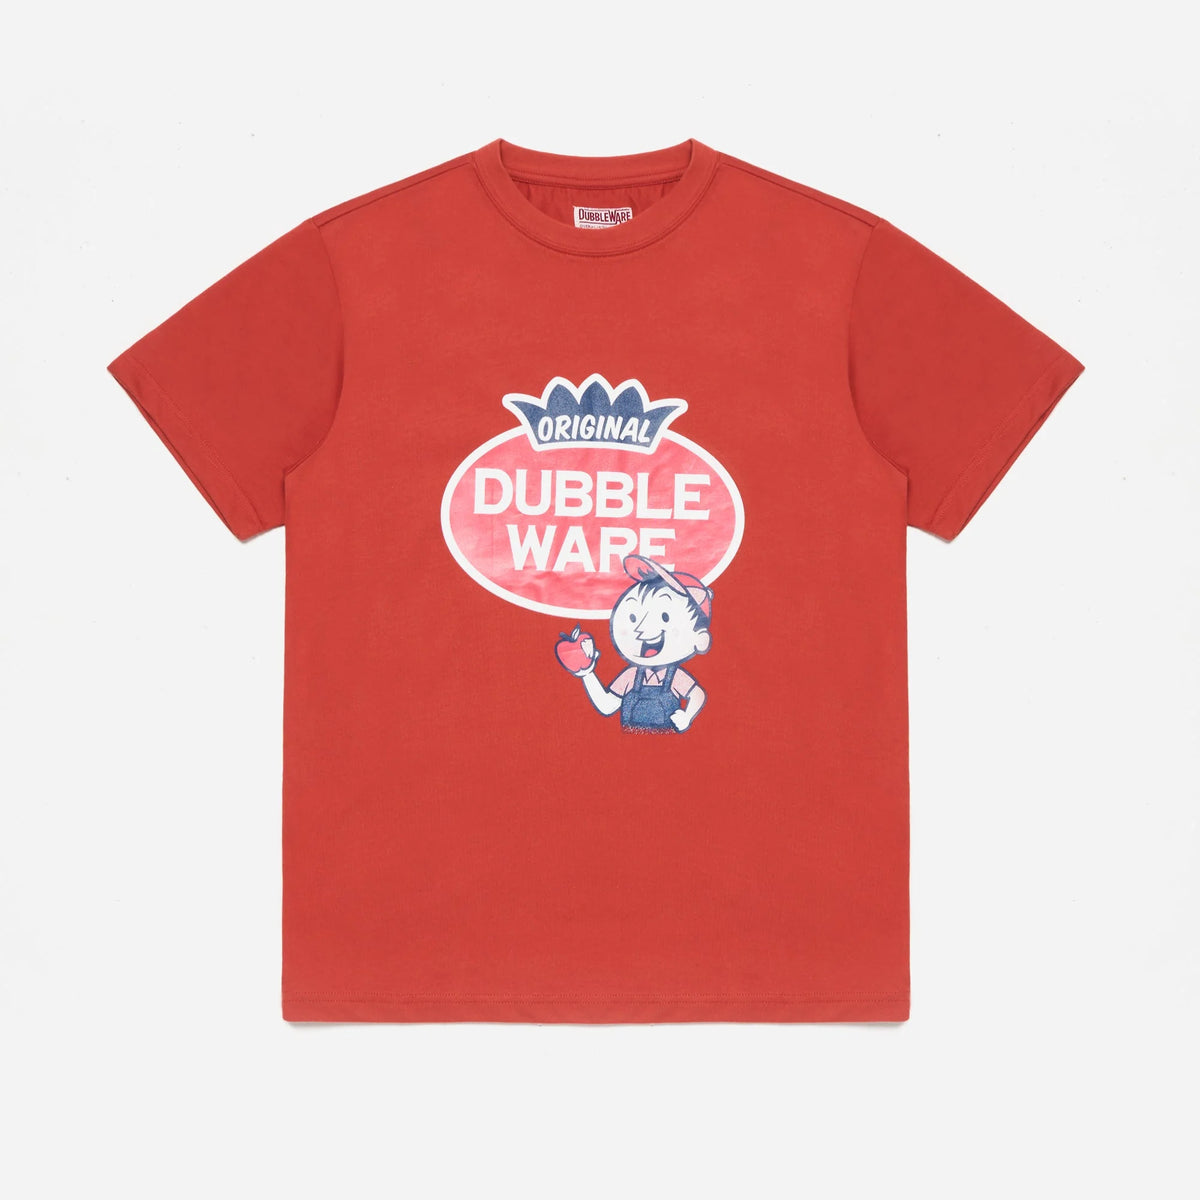 Dubbleware Mascot Baked Apple T-Shirt